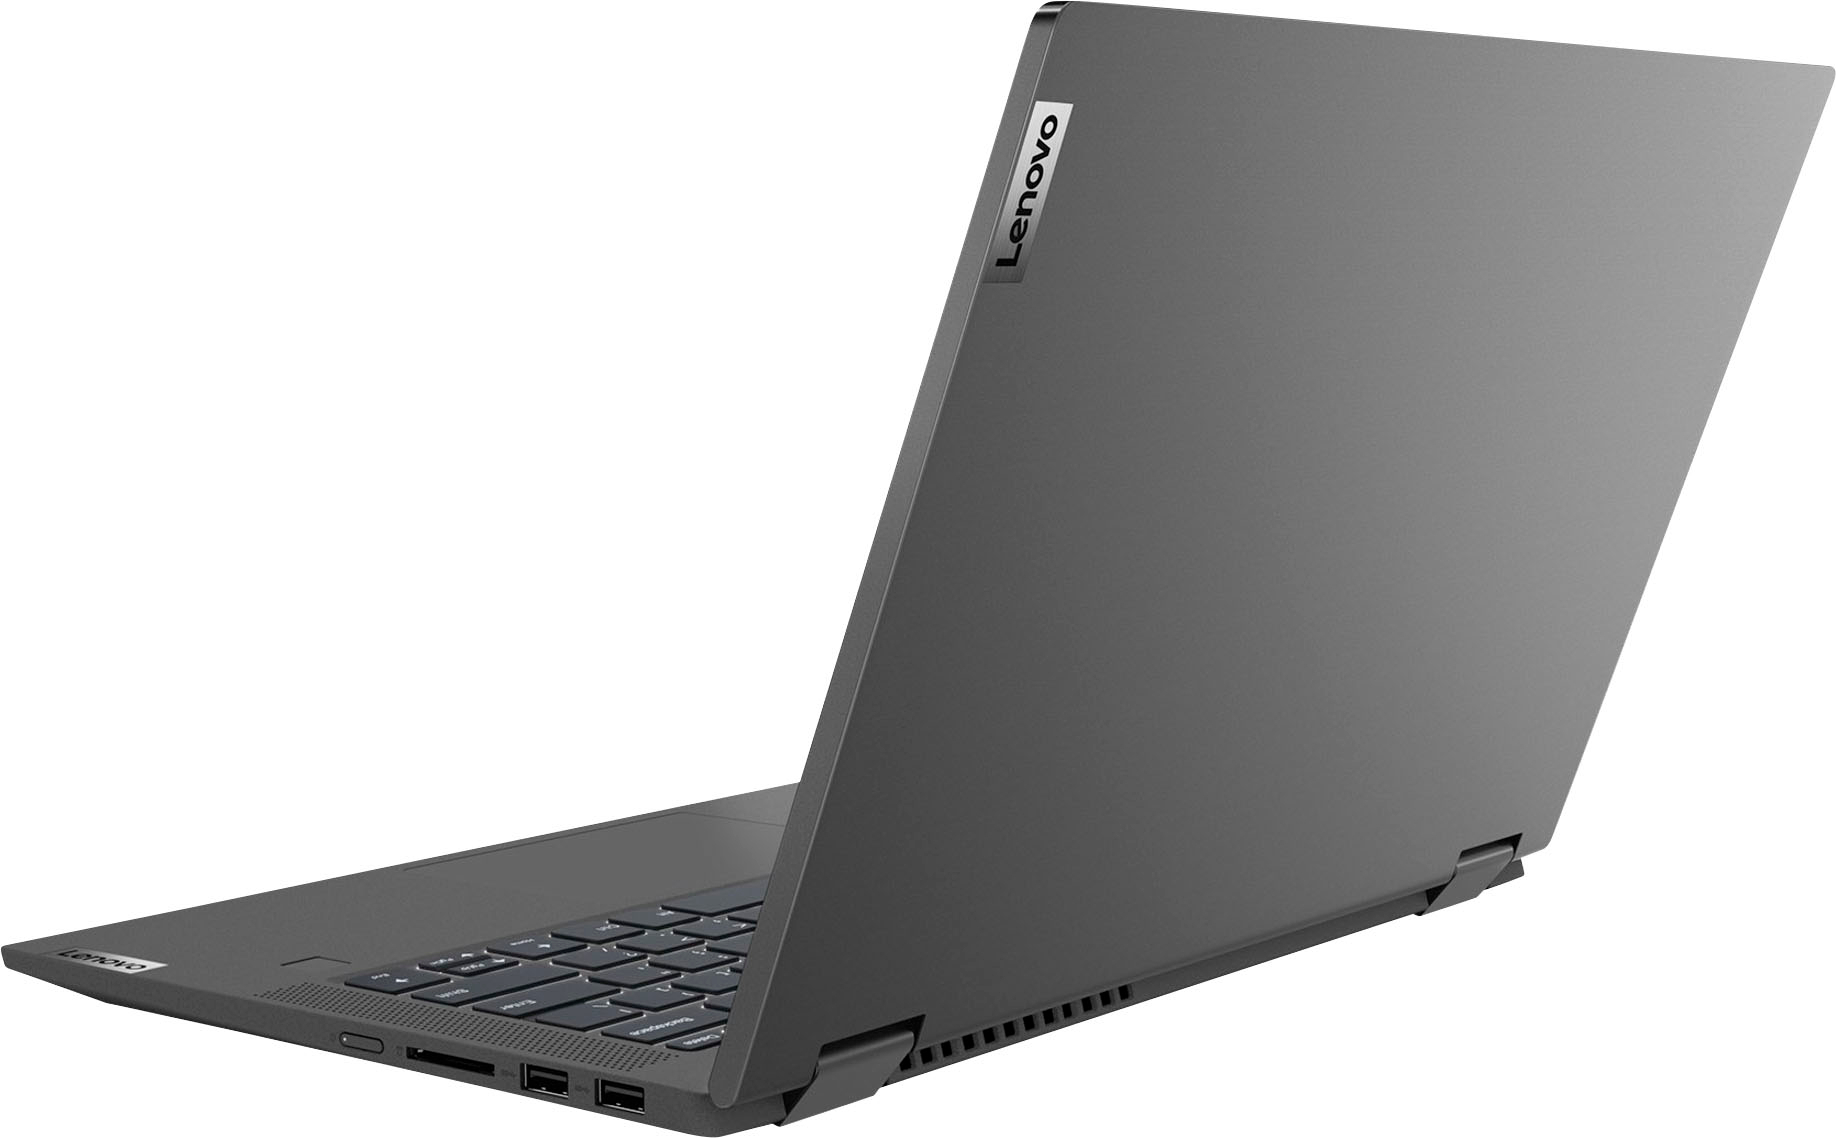 Angle View: Lenovo - Flex 5i 15.6" FHD Touch-Screen Laptop - Core i5-1135G7 - 8GB Memory - 256GB SSD - Graphite Grey